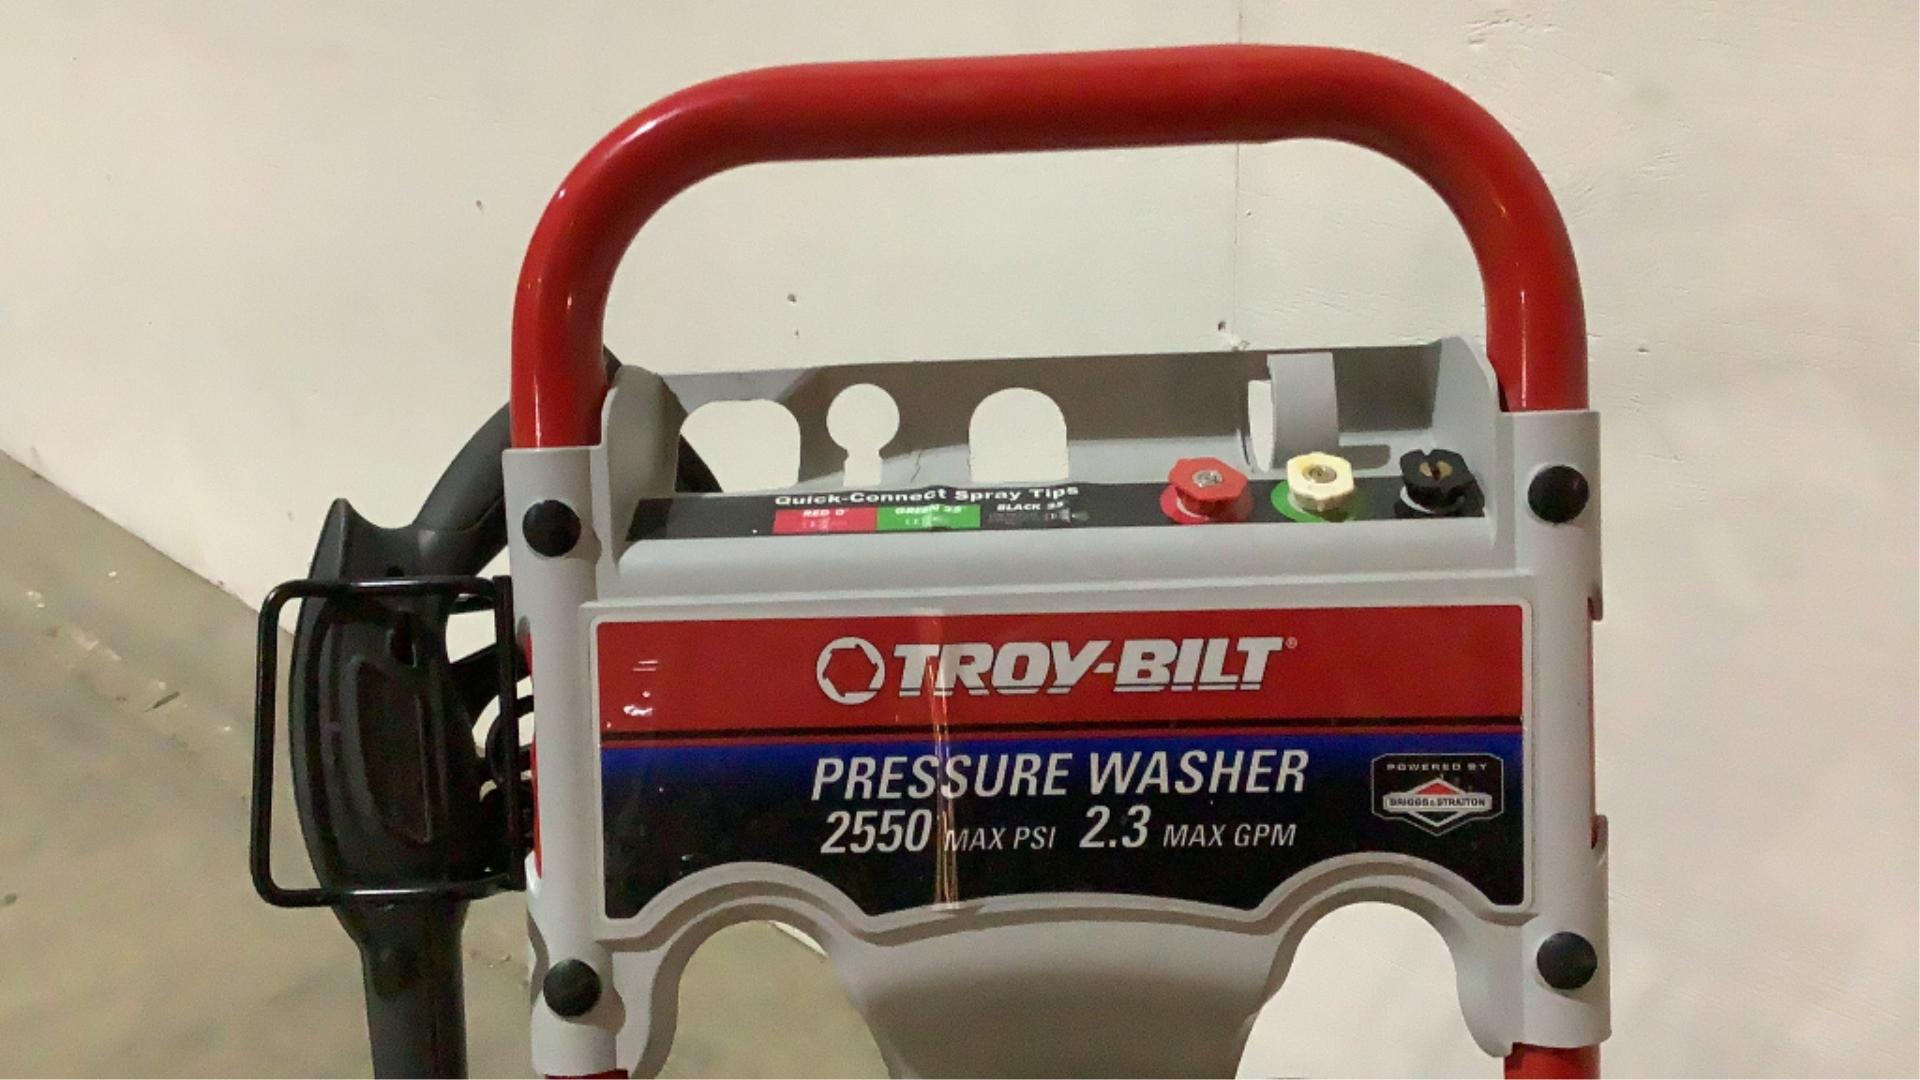 Troy-Bilt Pressure Washer 020337